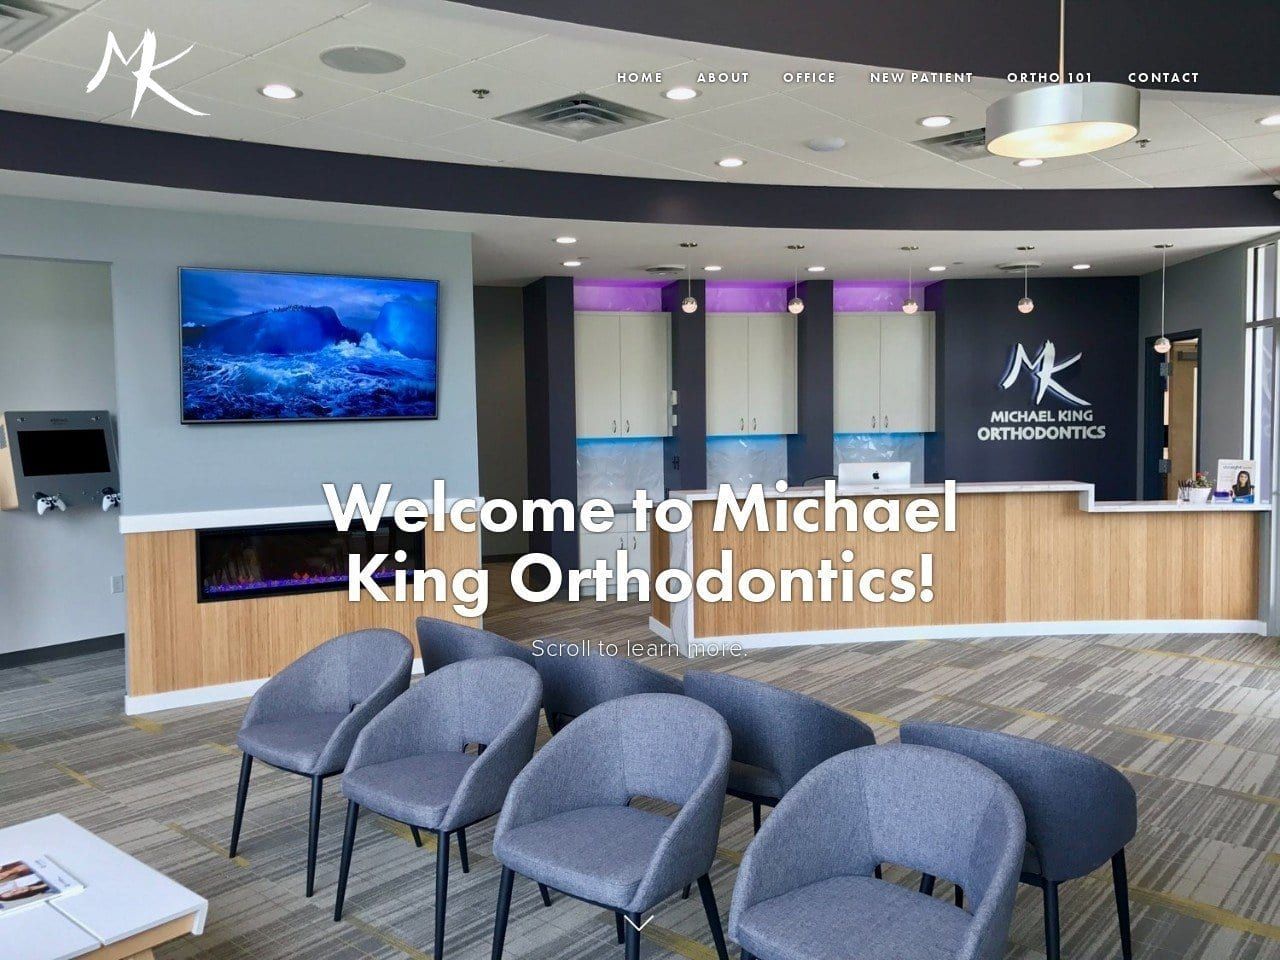 King Orthodontics Website Screenshot from michaelkingorthodontics.com